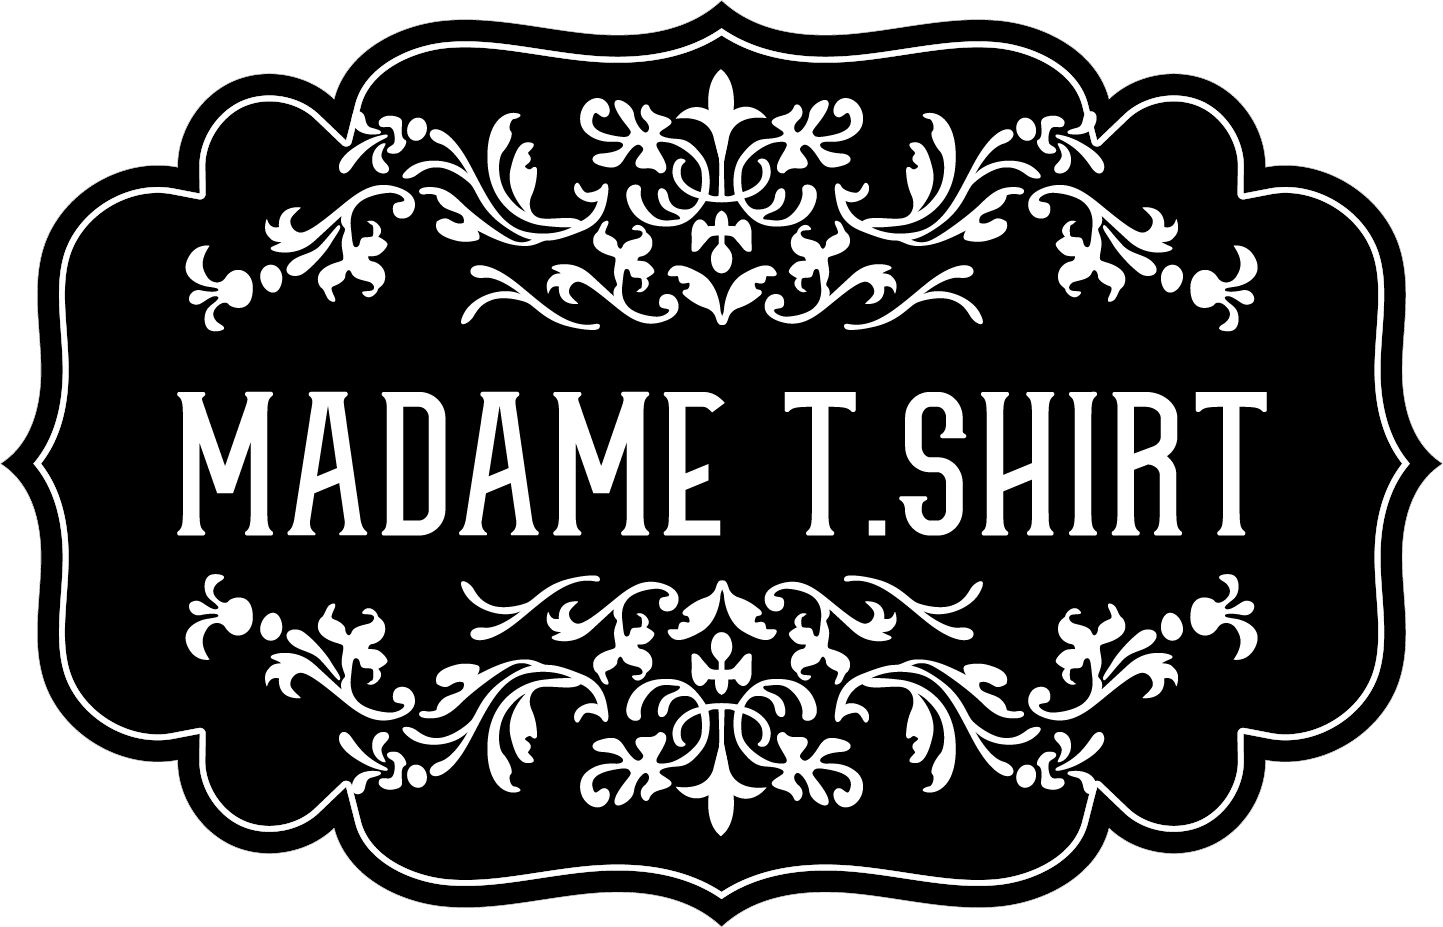 Madame T-shirt